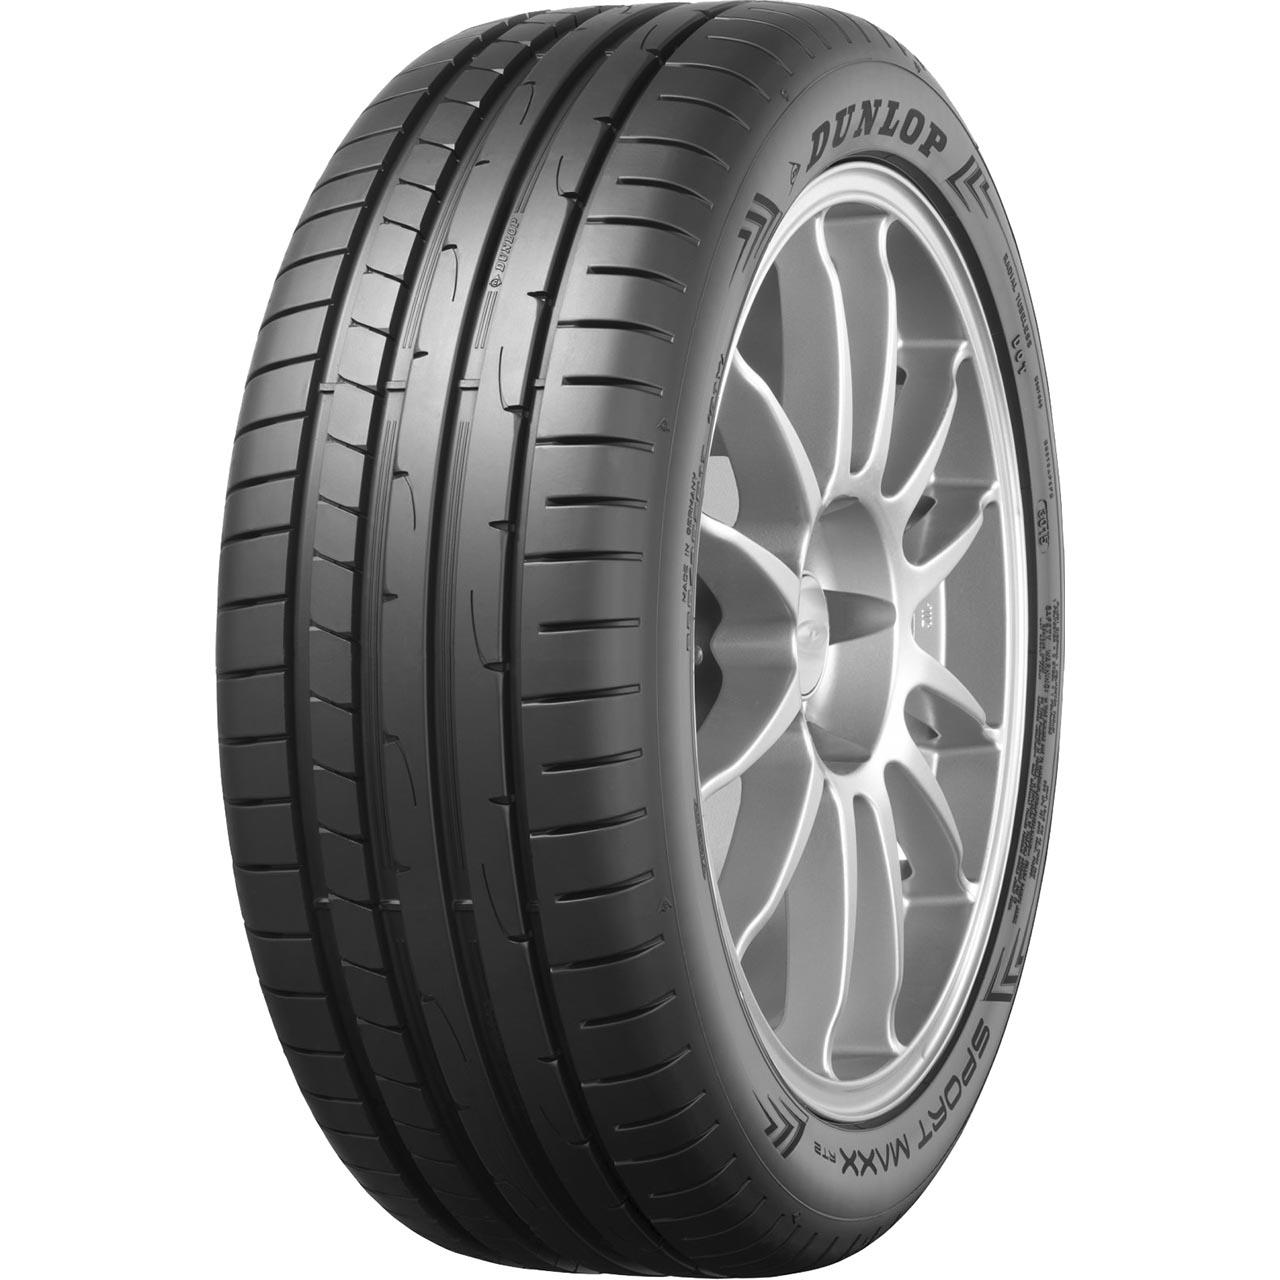 Gomme Nuove Dunlop 245/45 R17 99Y SP.MAXX RT2 MFS XL pneumatici nuovi Estivo